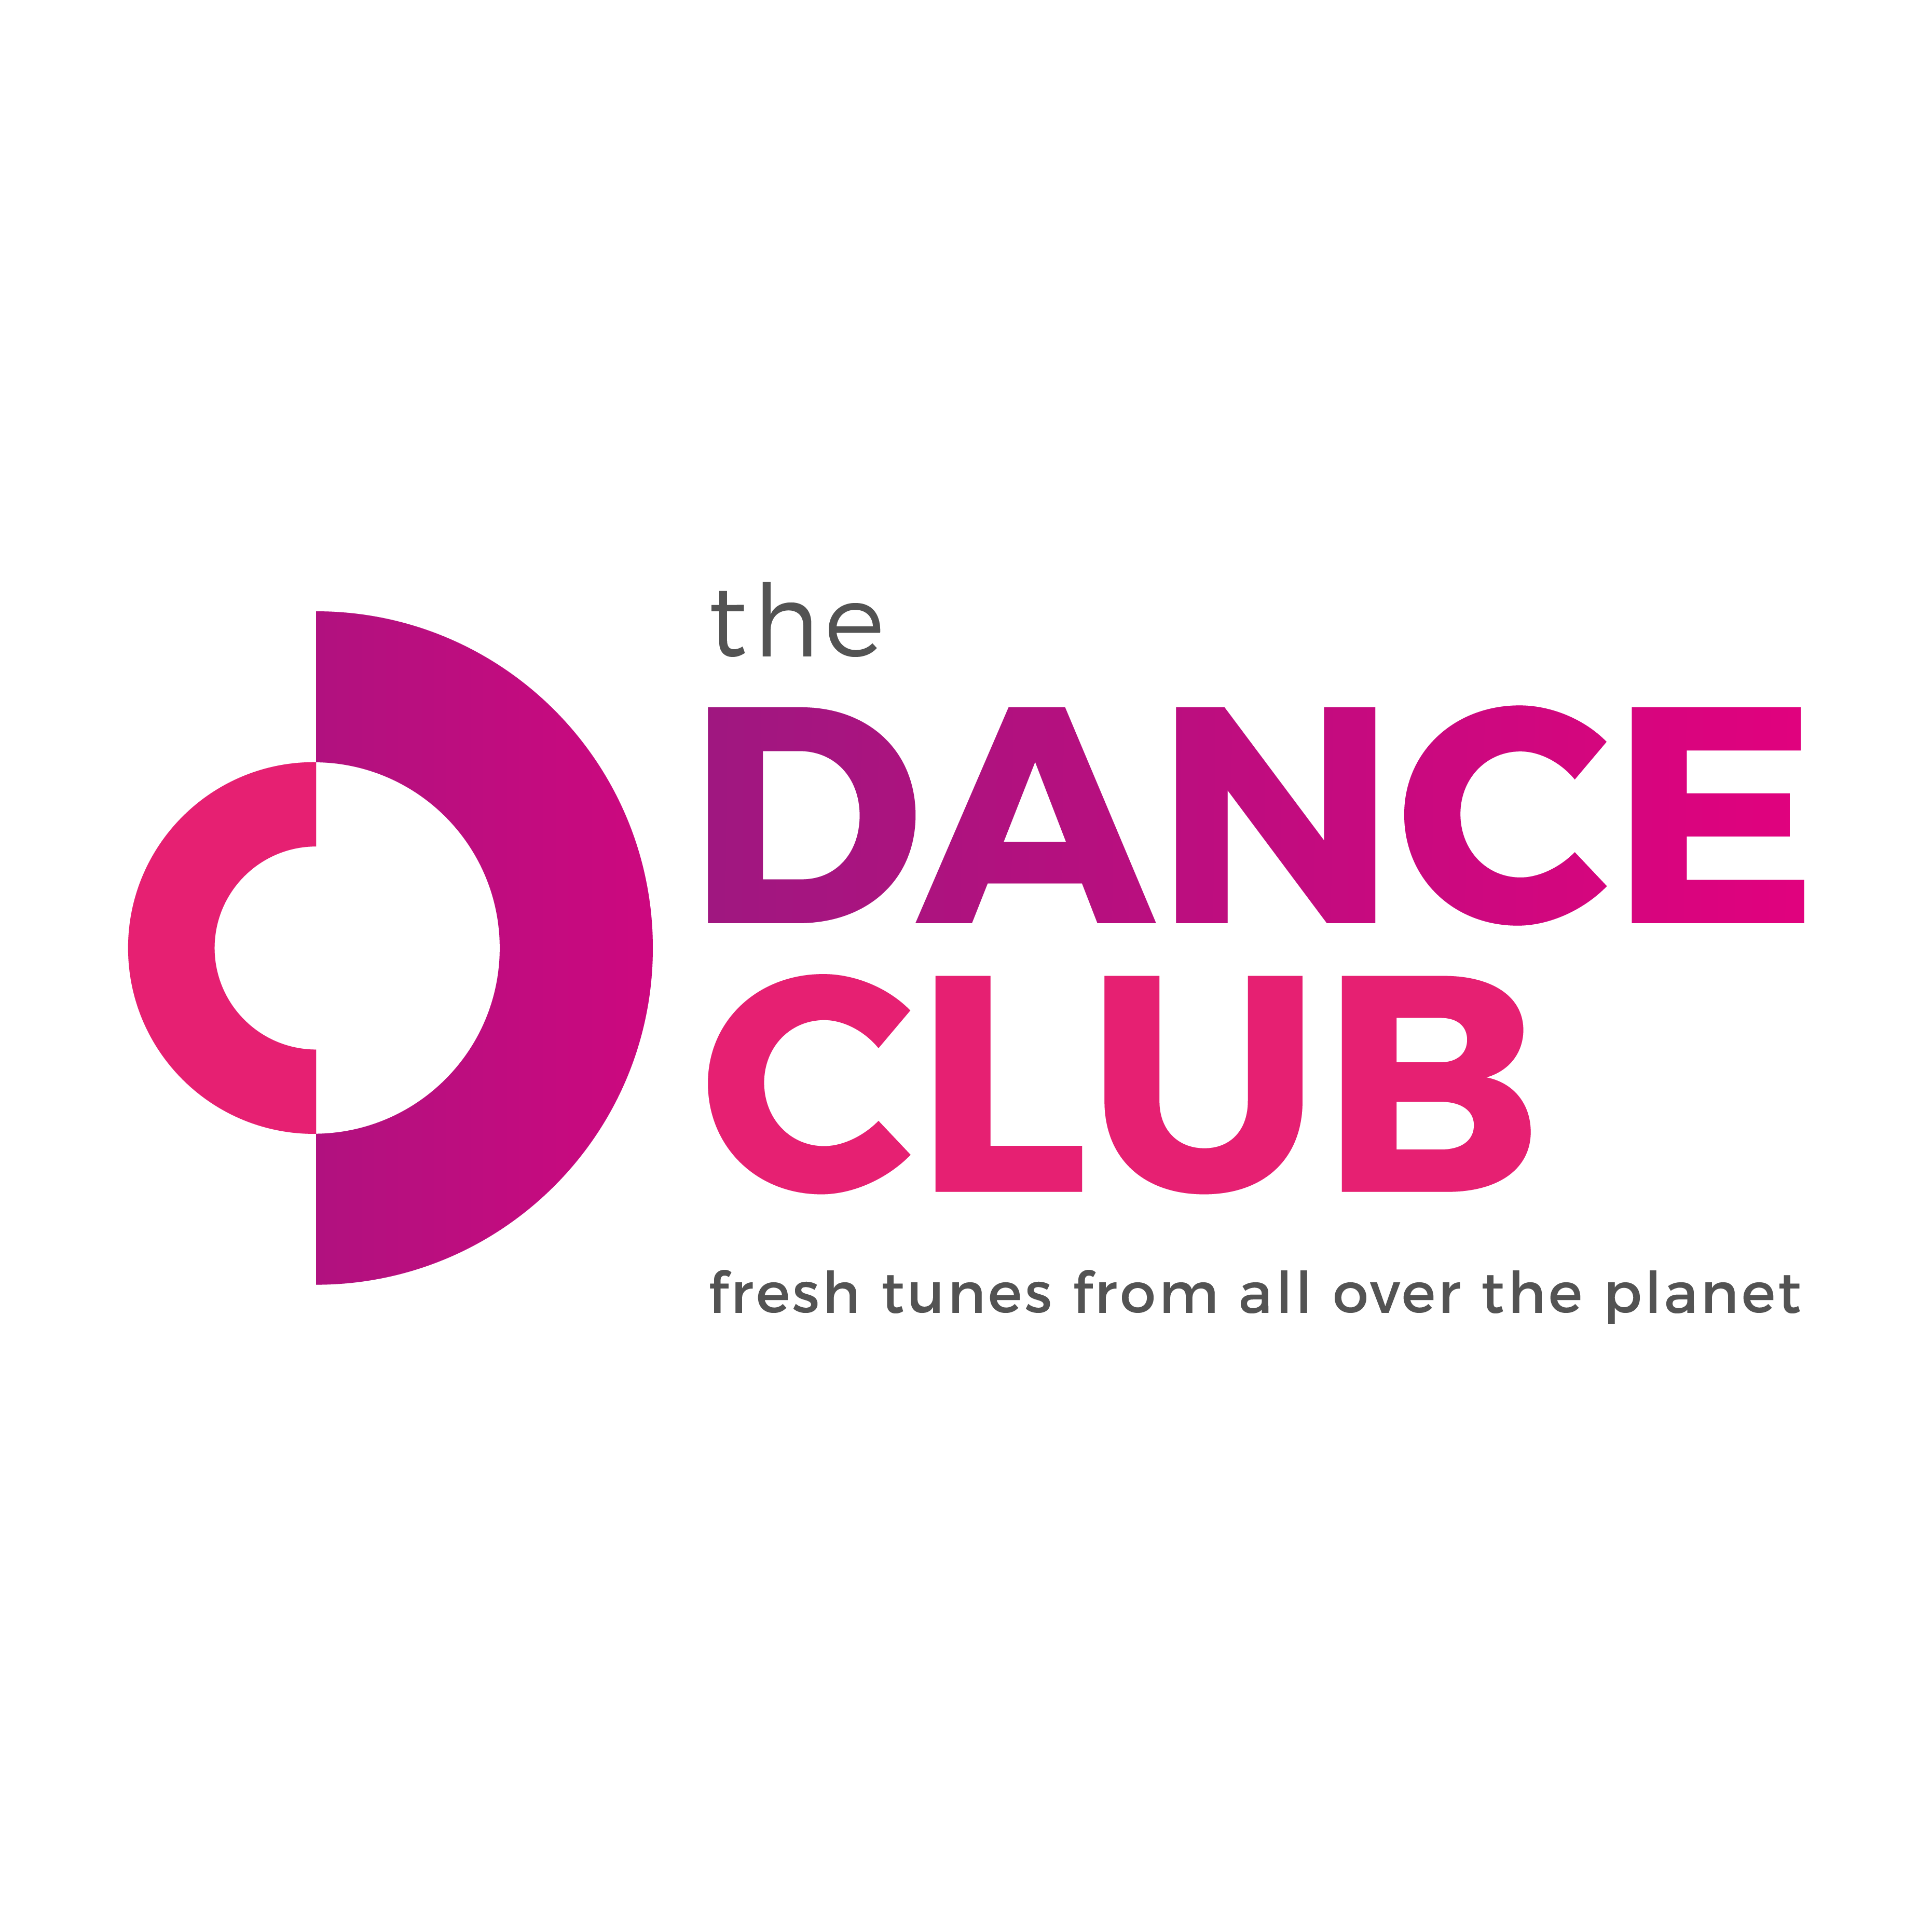 Fresh tunes. Логотипы клубов. Club логотип. Dance Club надпись. Диско клуб logo.